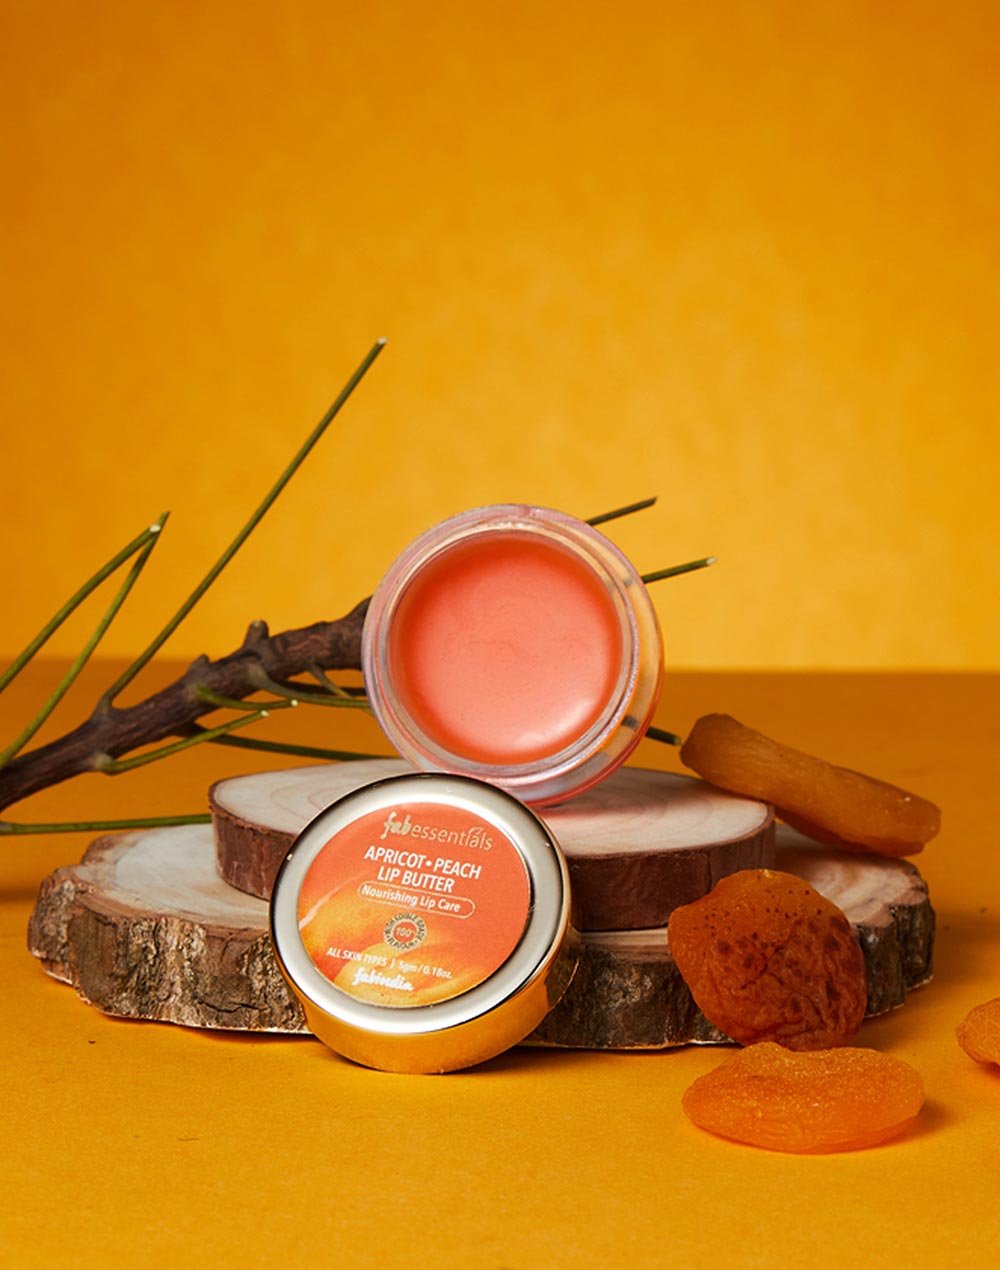 Fabessentials Apricot Peach Lip Butter - 5 gm